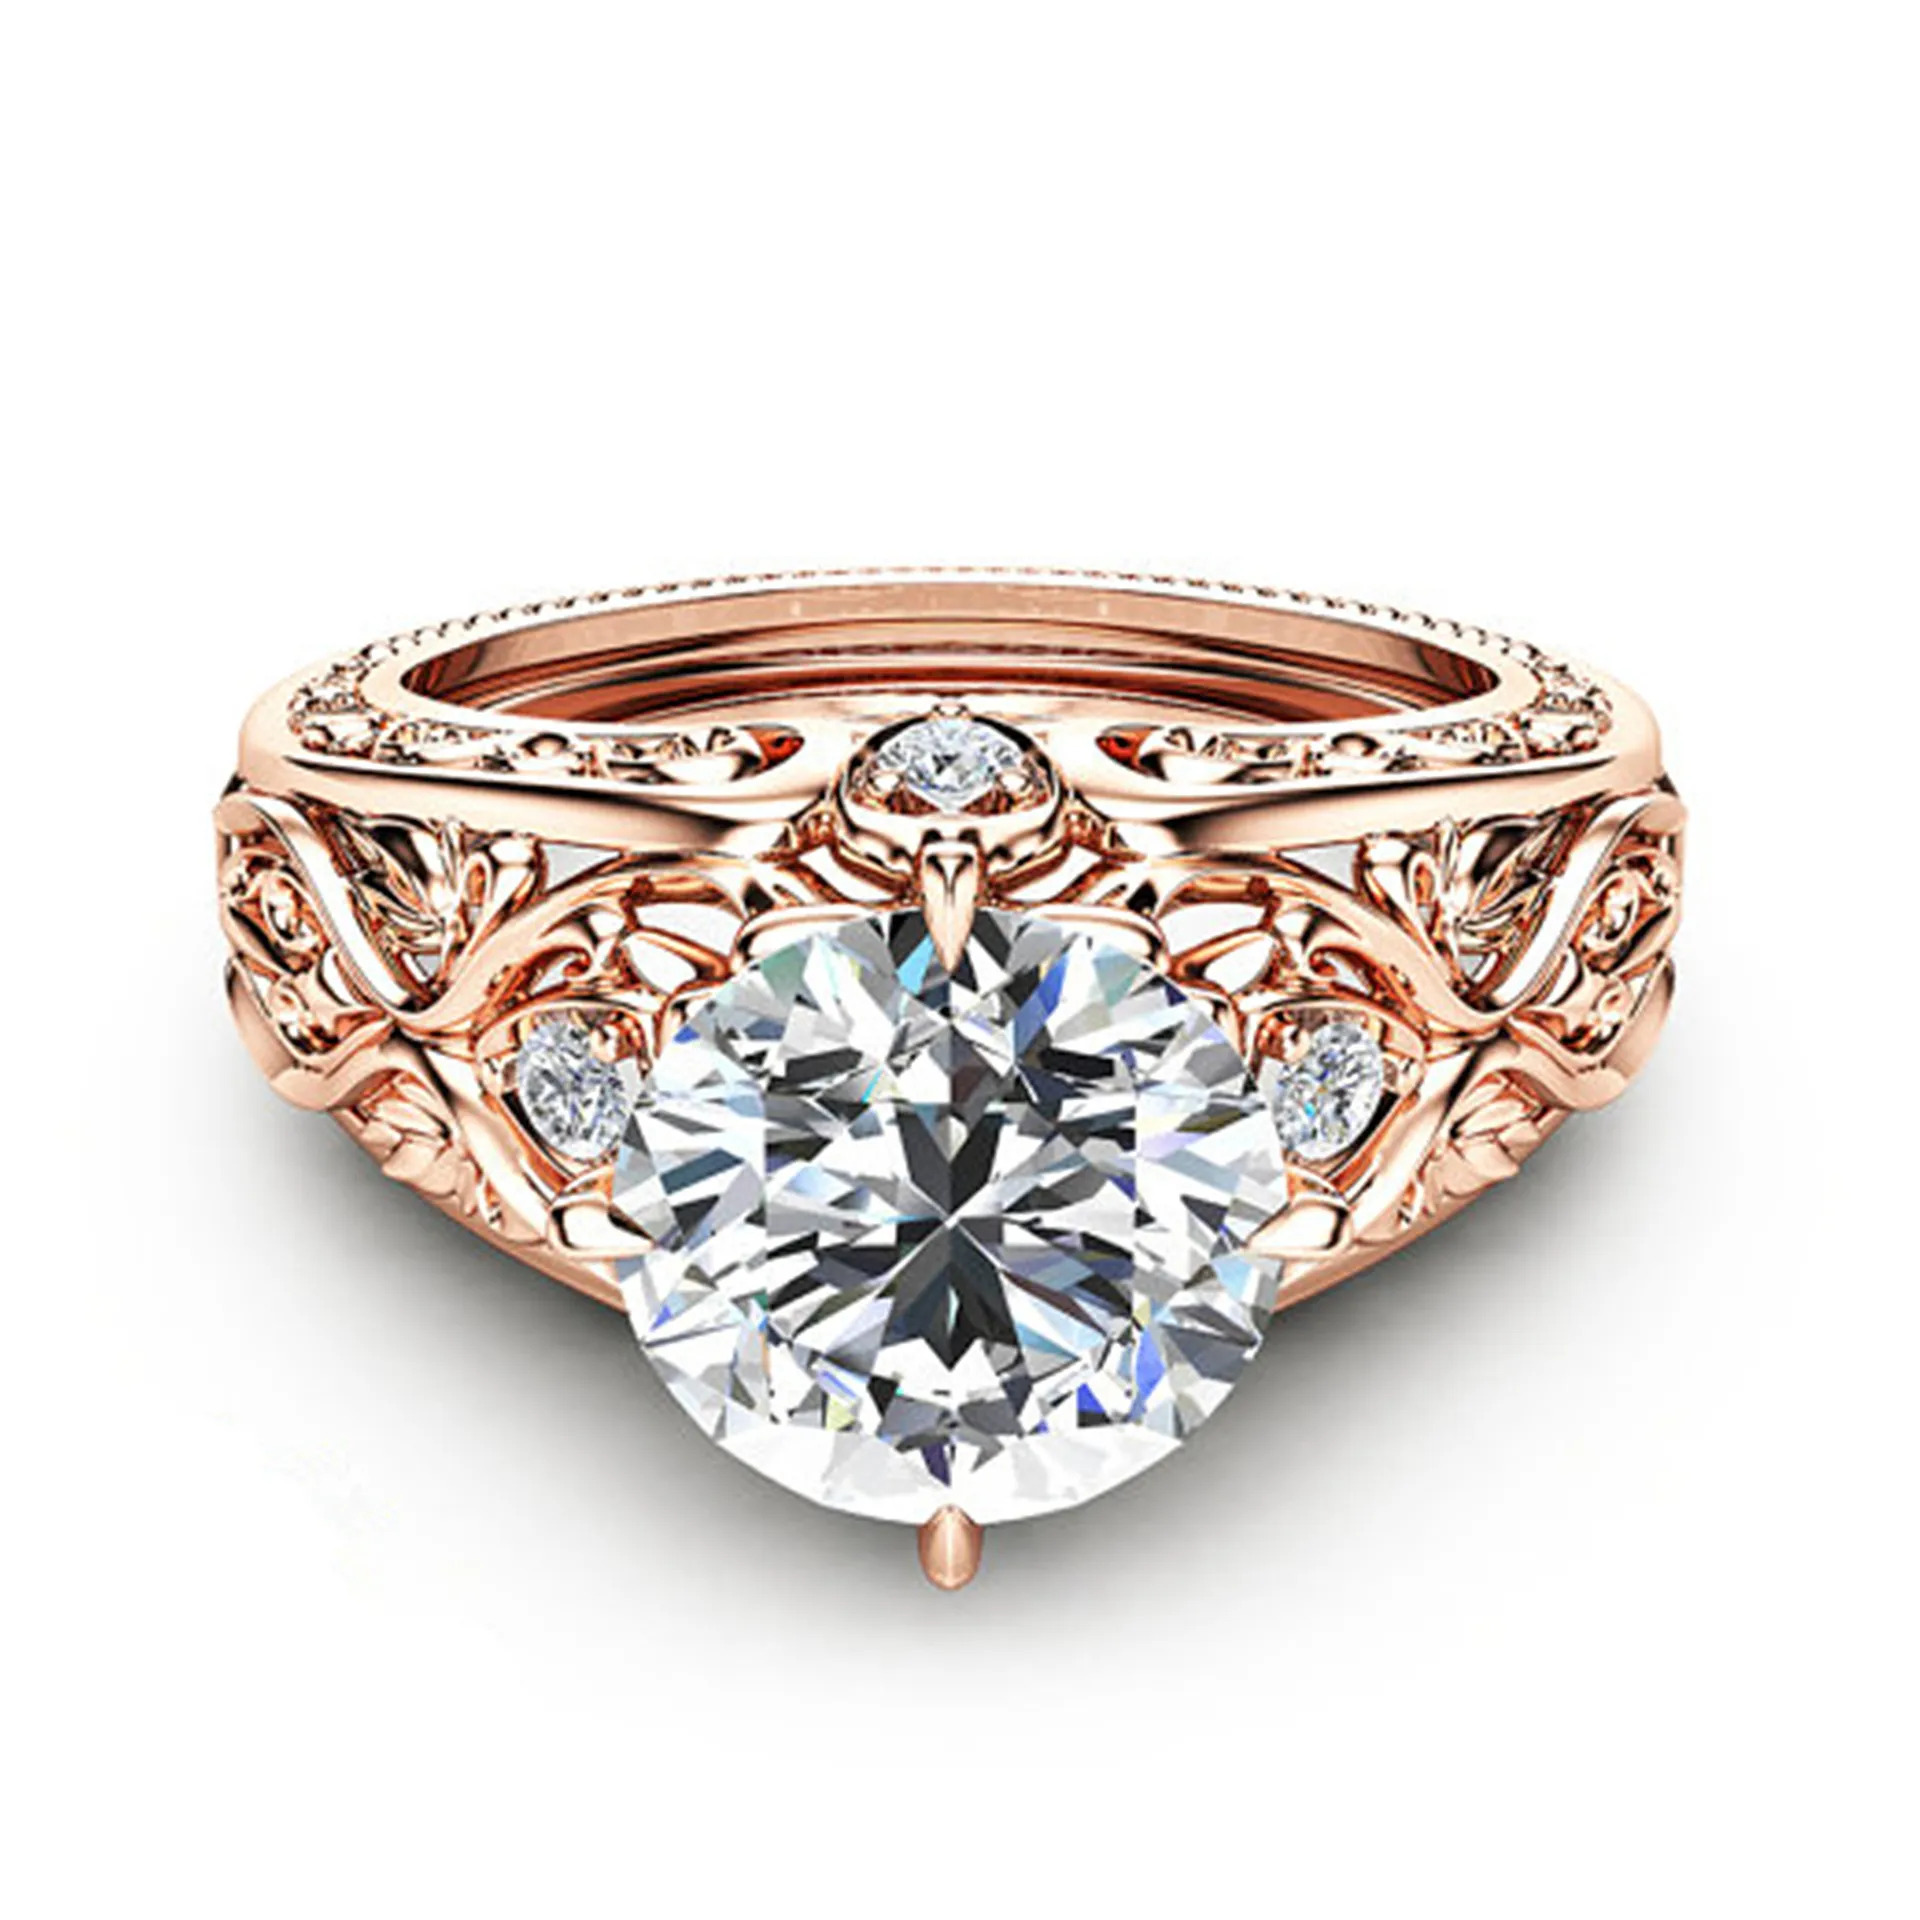 Europejska i Amerykańska Moda High-End Engagement Pierścionek Unikalny Design 2 Karat High-End Cyrkon Ring Art Decoration Style Rose Gold Ring